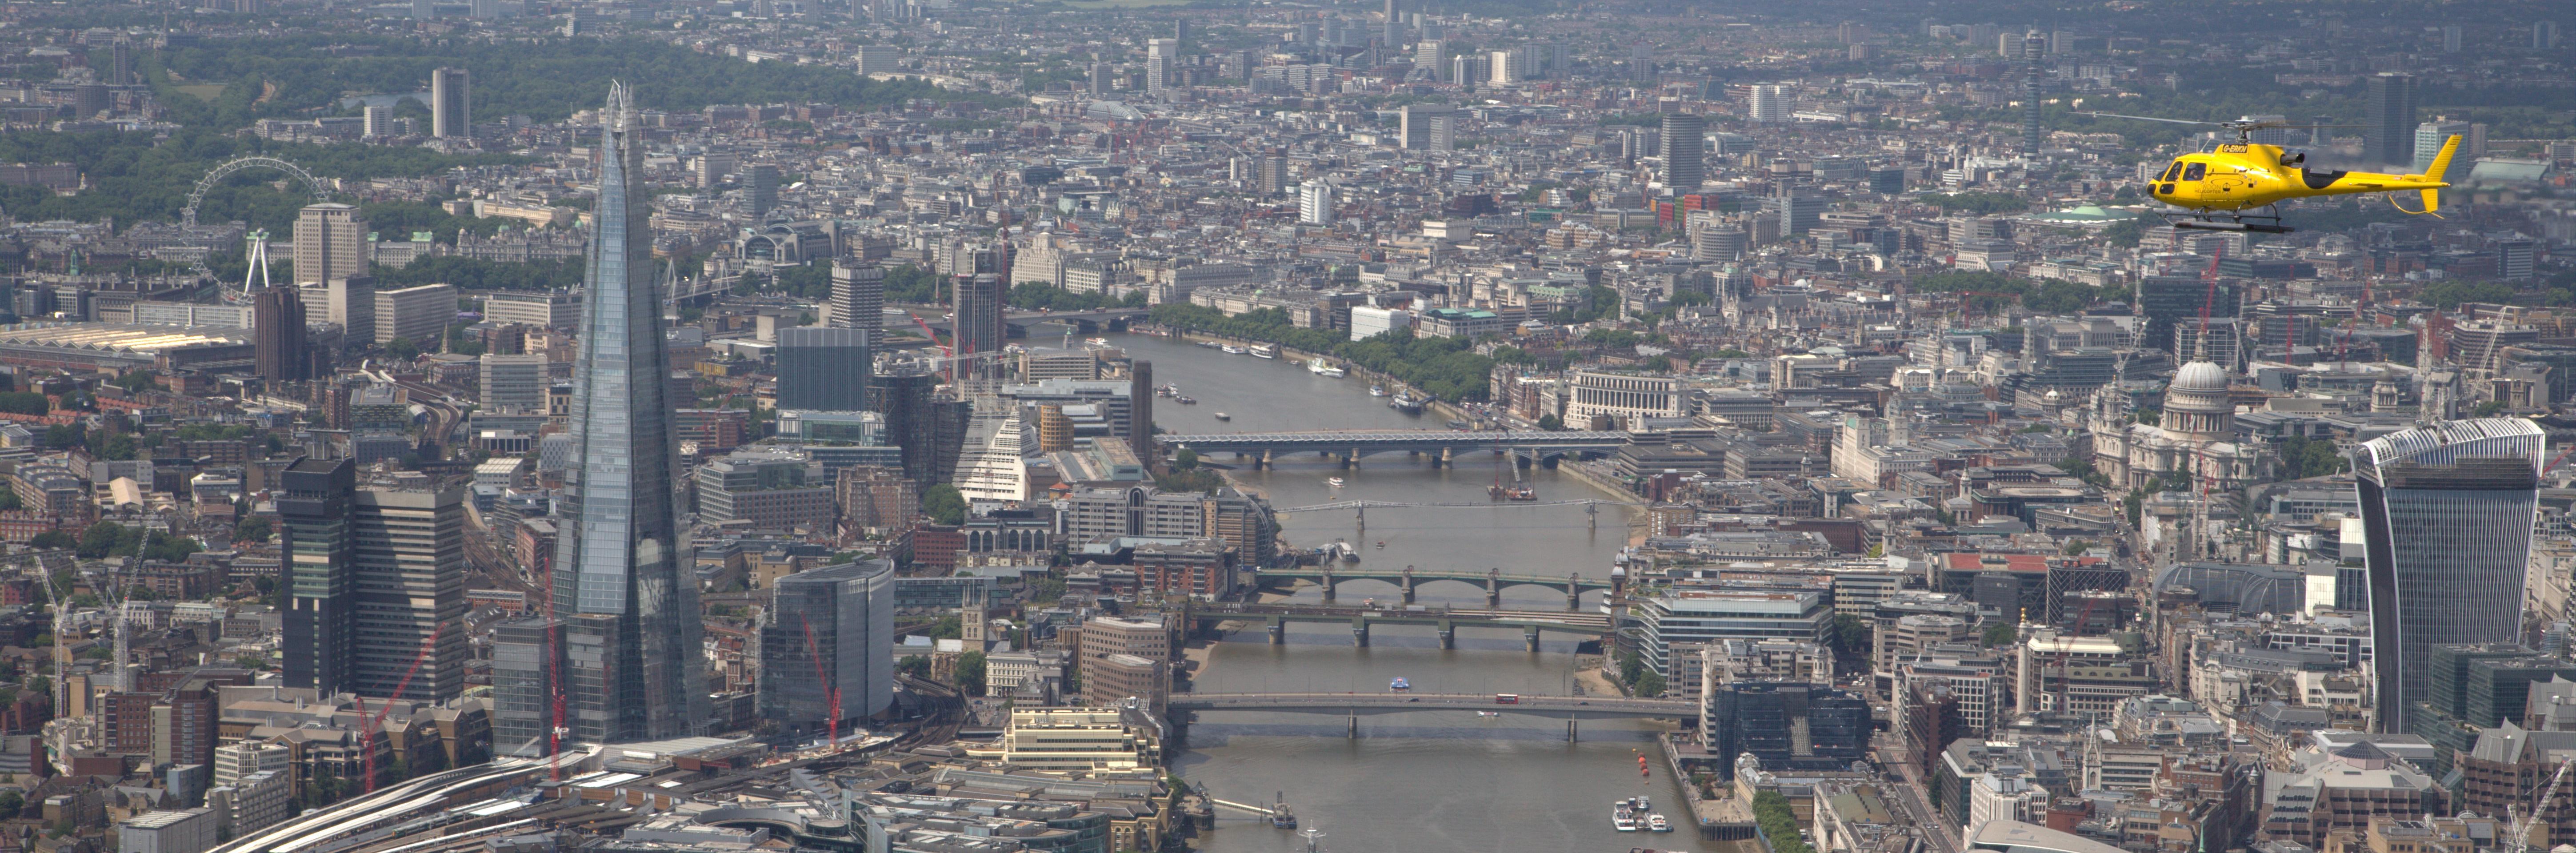 Survol de Londres en hélicoptère